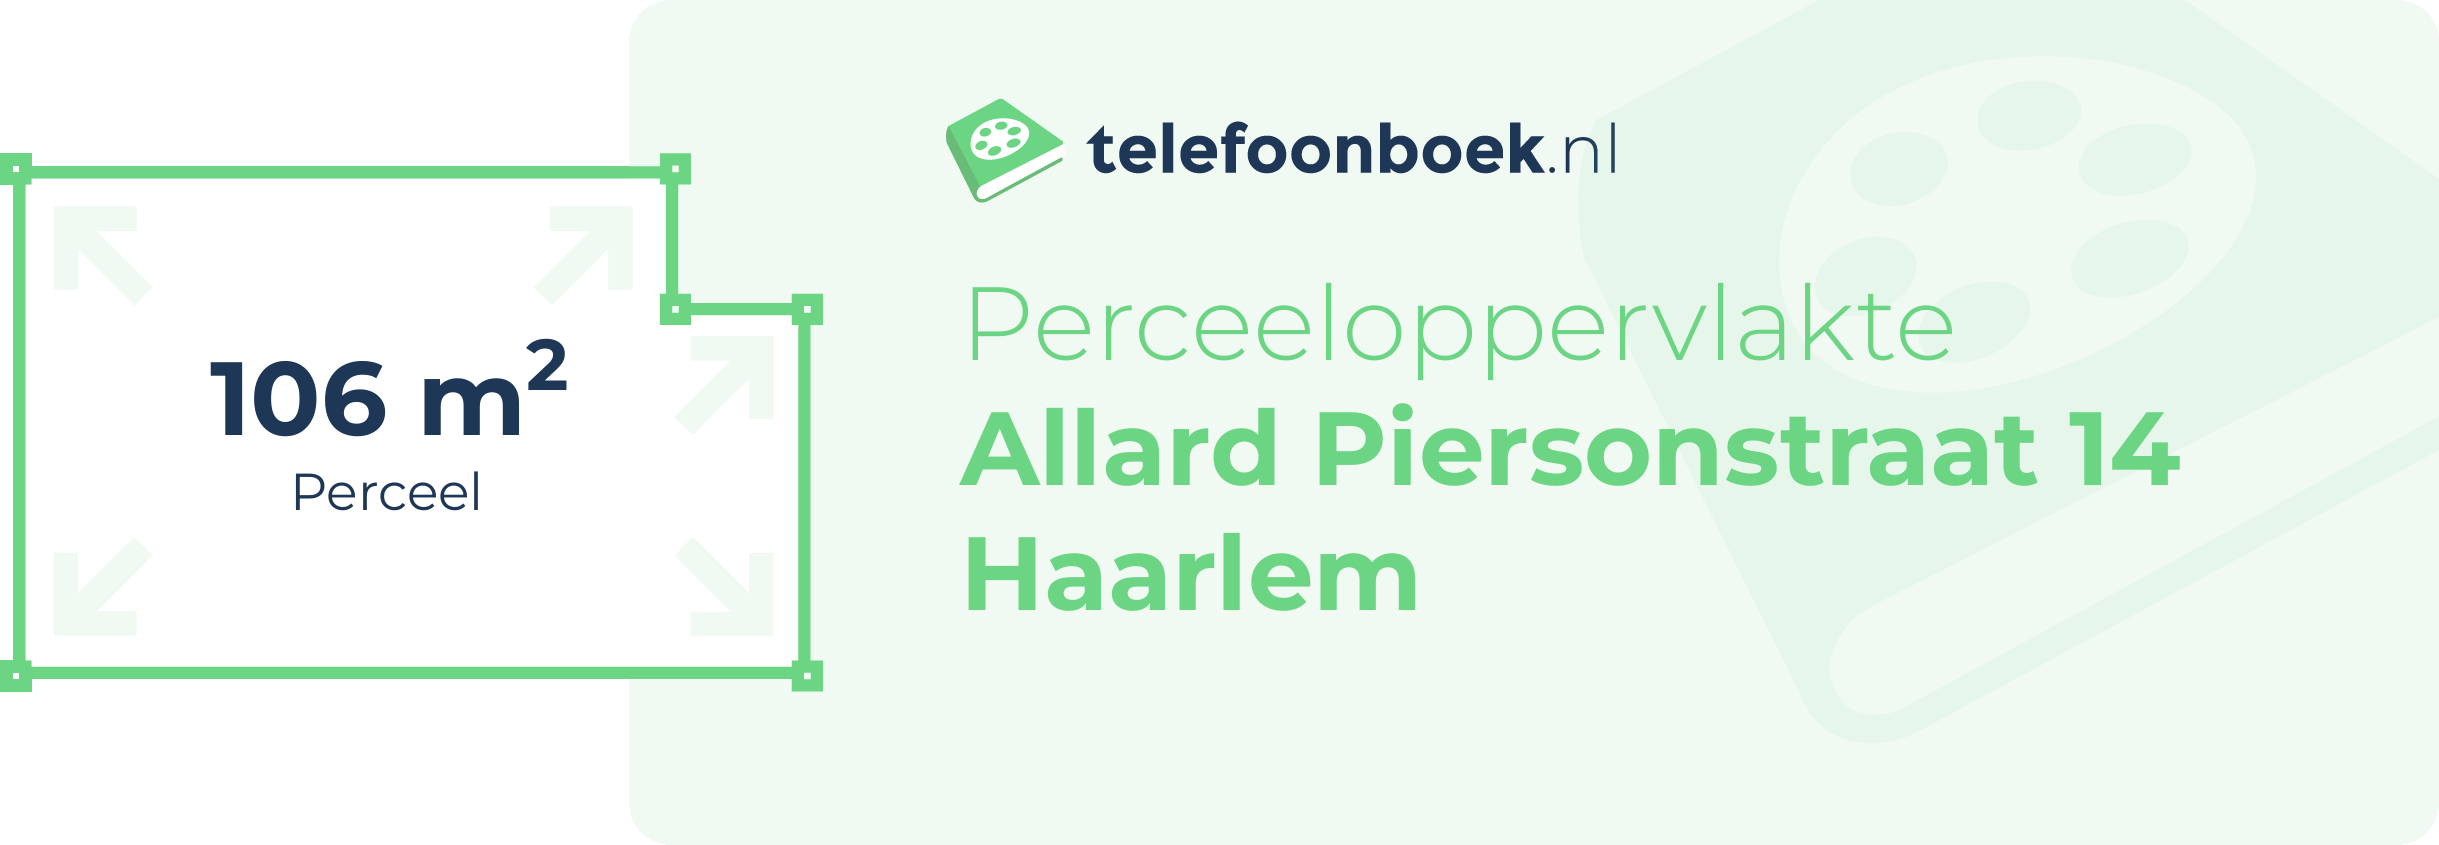 Perceeloppervlakte Allard Piersonstraat 14 Haarlem